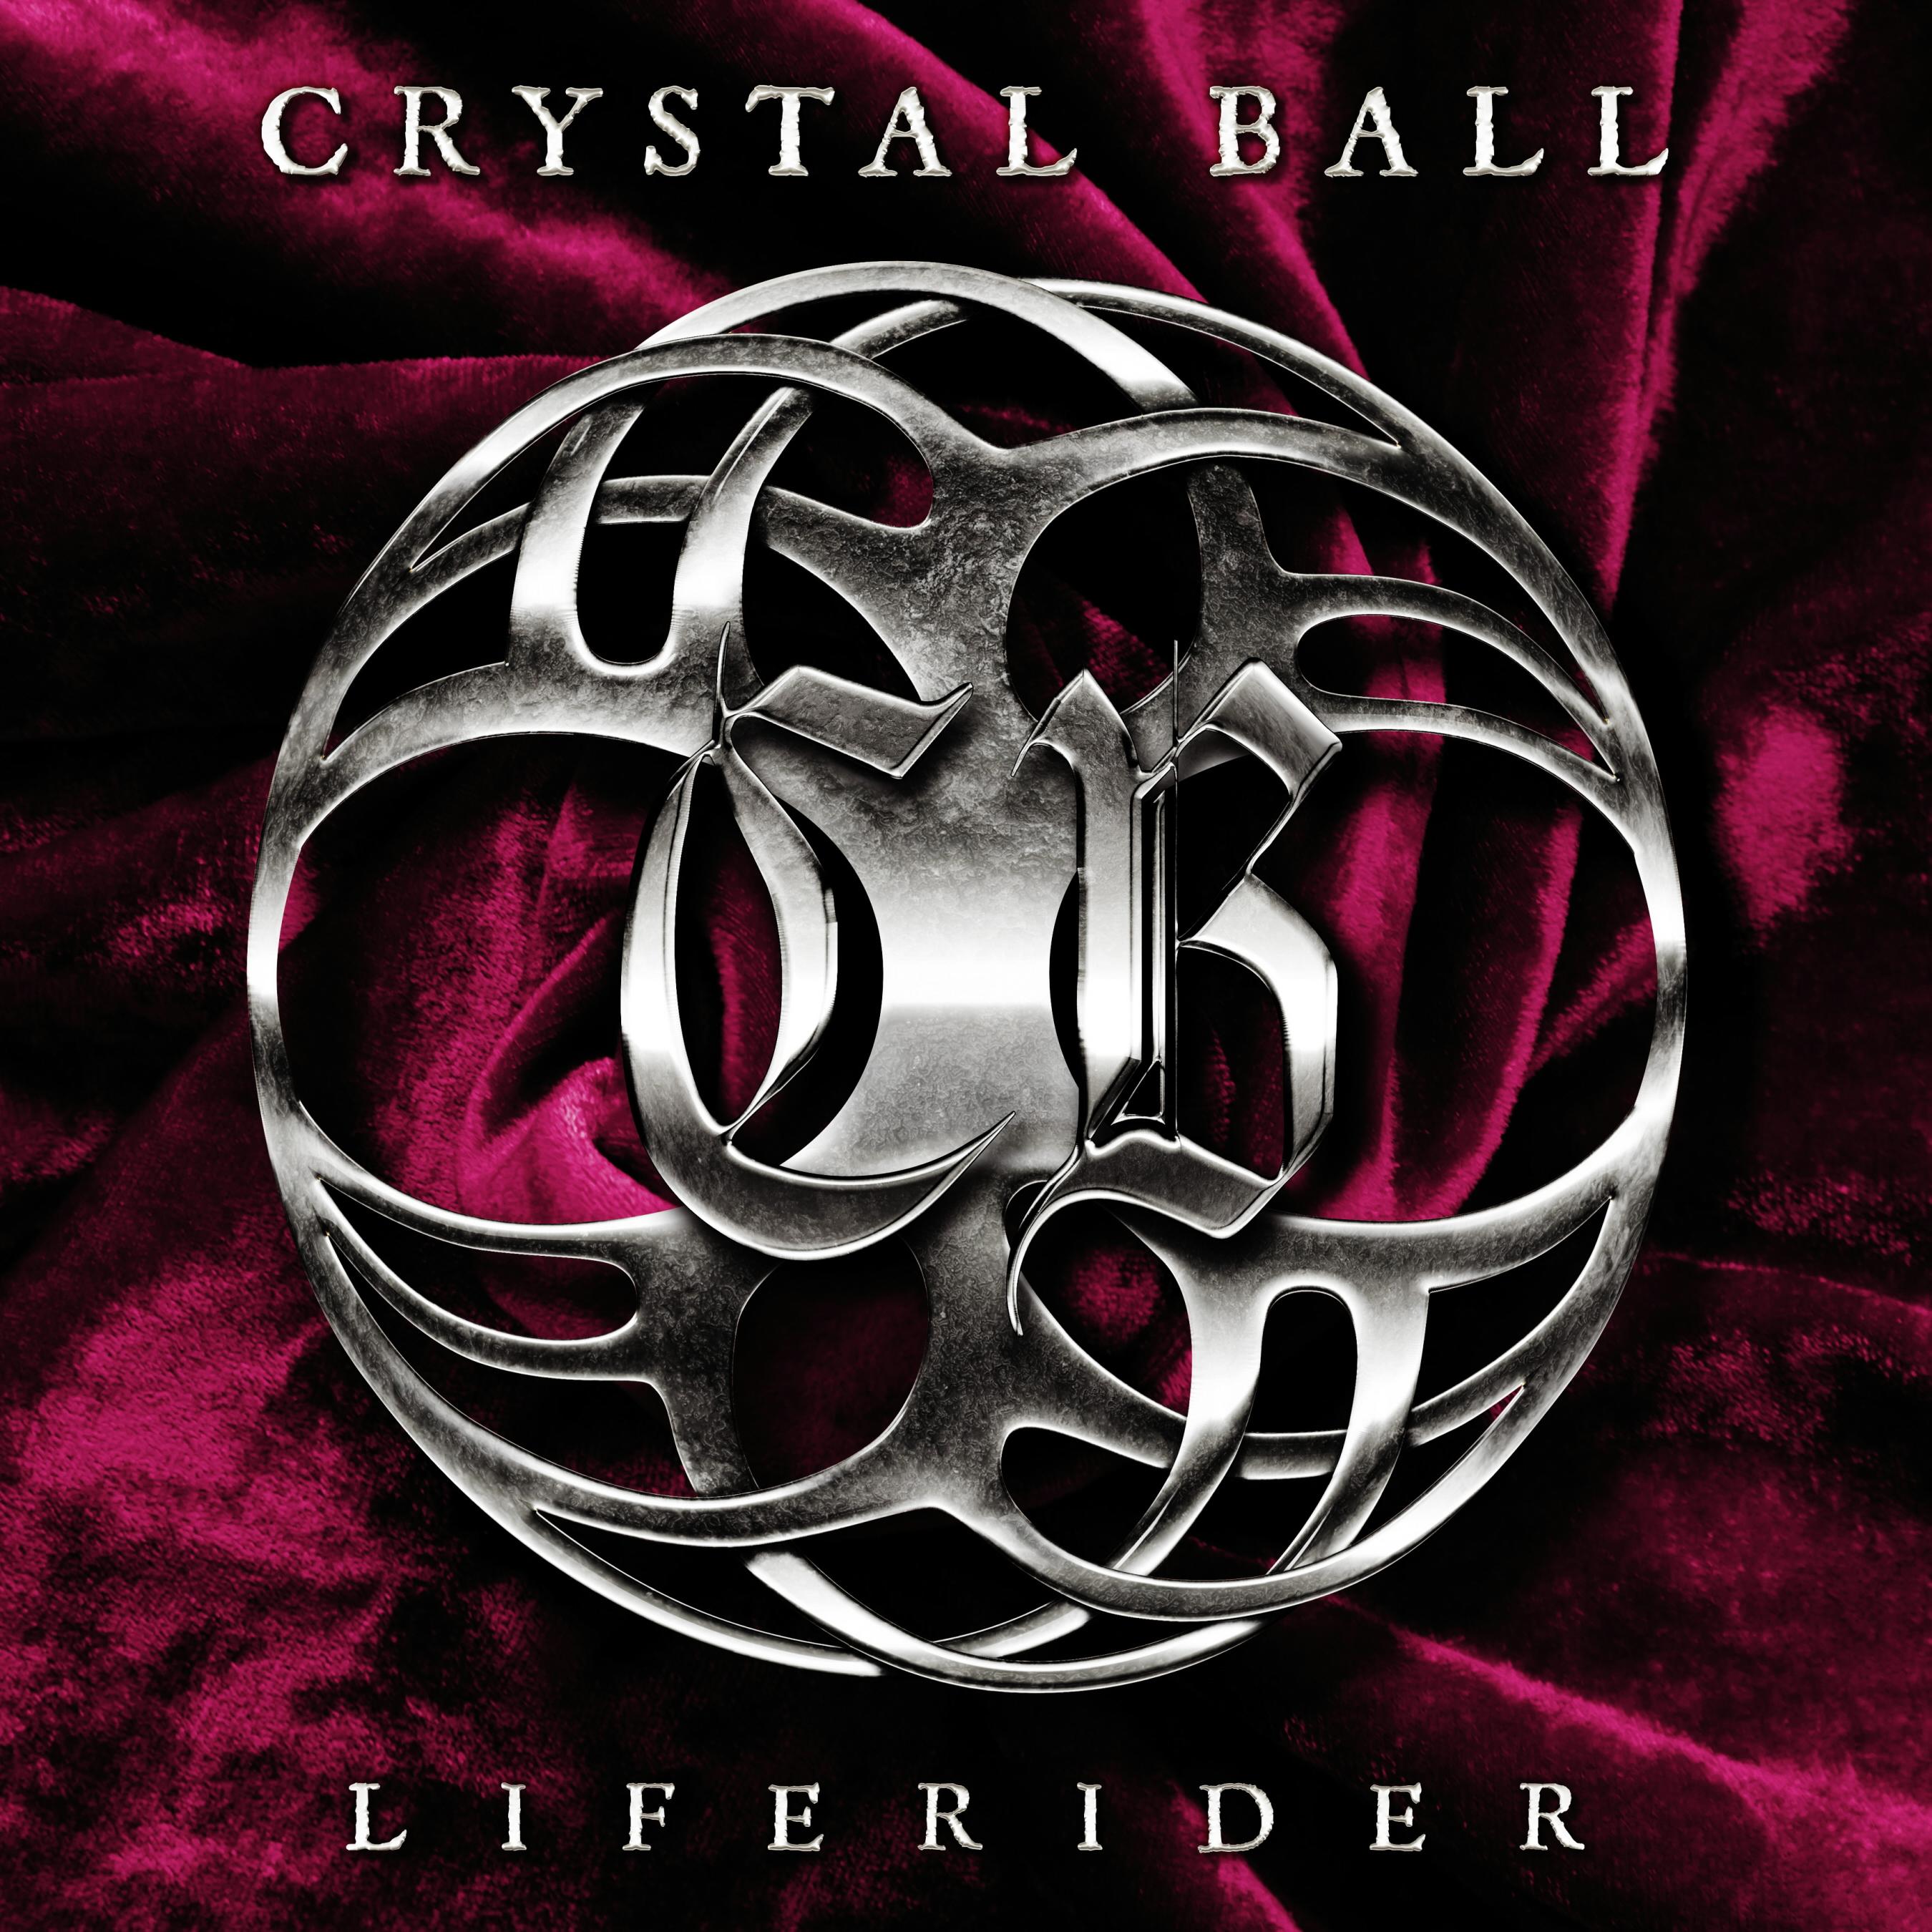 Ball secrets. Crystal Ball Liferider 2015. Crystal Ball обложки альбомов Liferider. Crystal Ball группа дискография. Crystal Ball Secrets 2007.